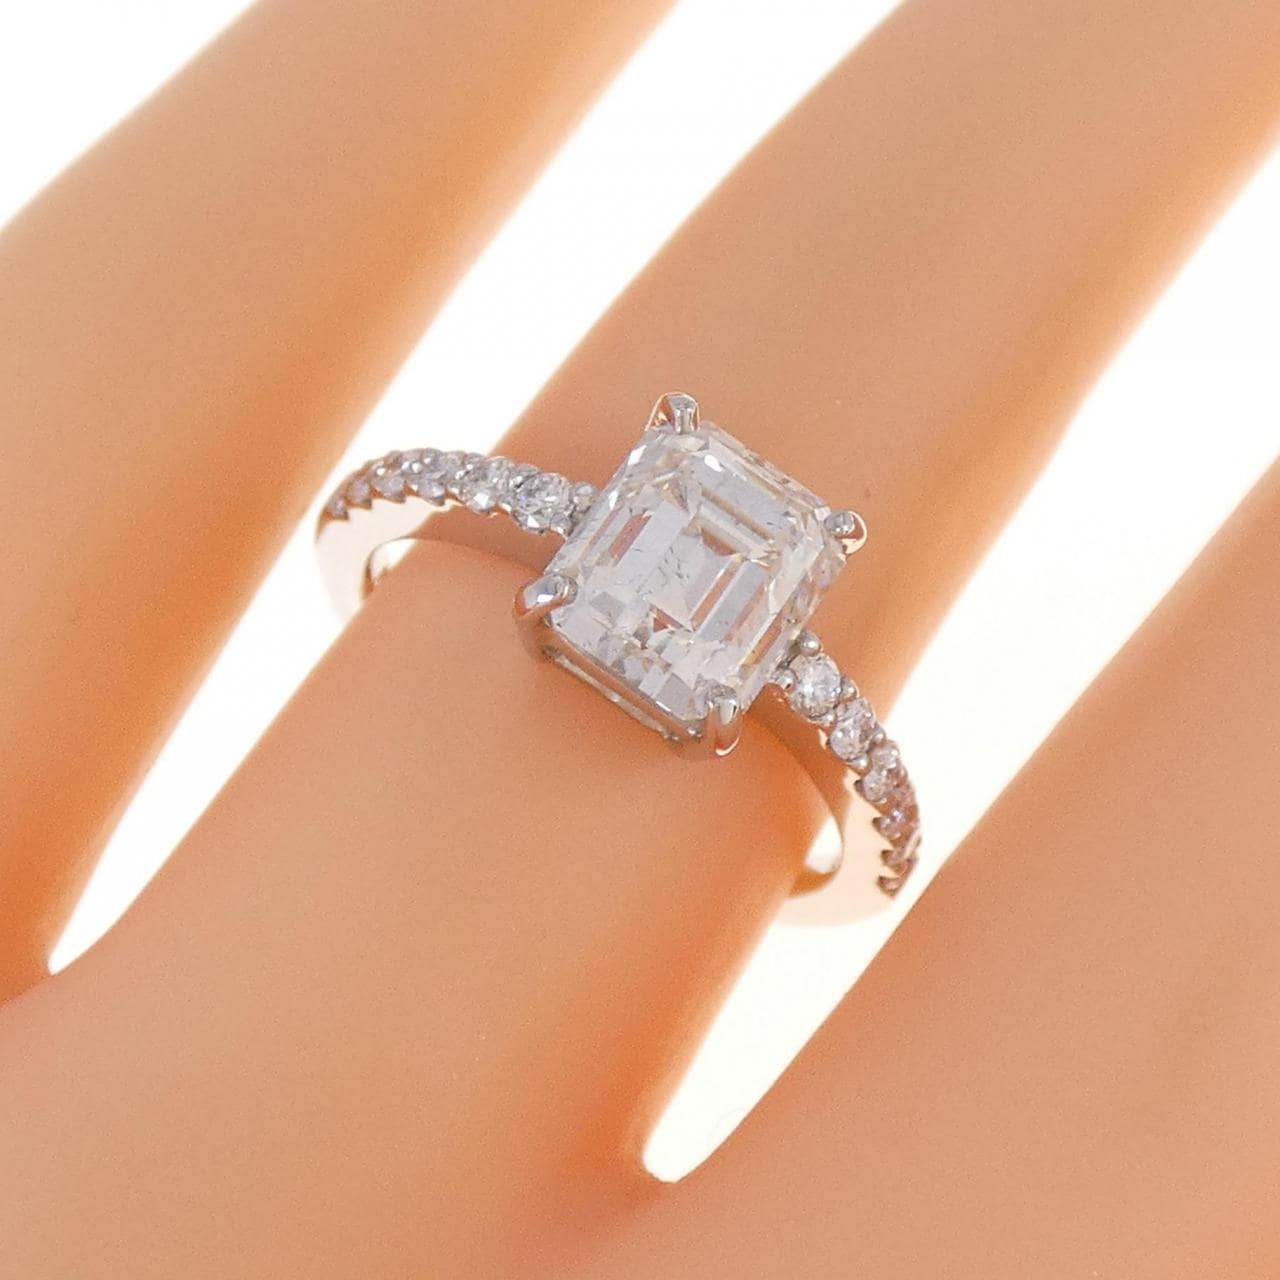 [Remake] PT Diamond Ring 2.110CT H SI2 Emerald